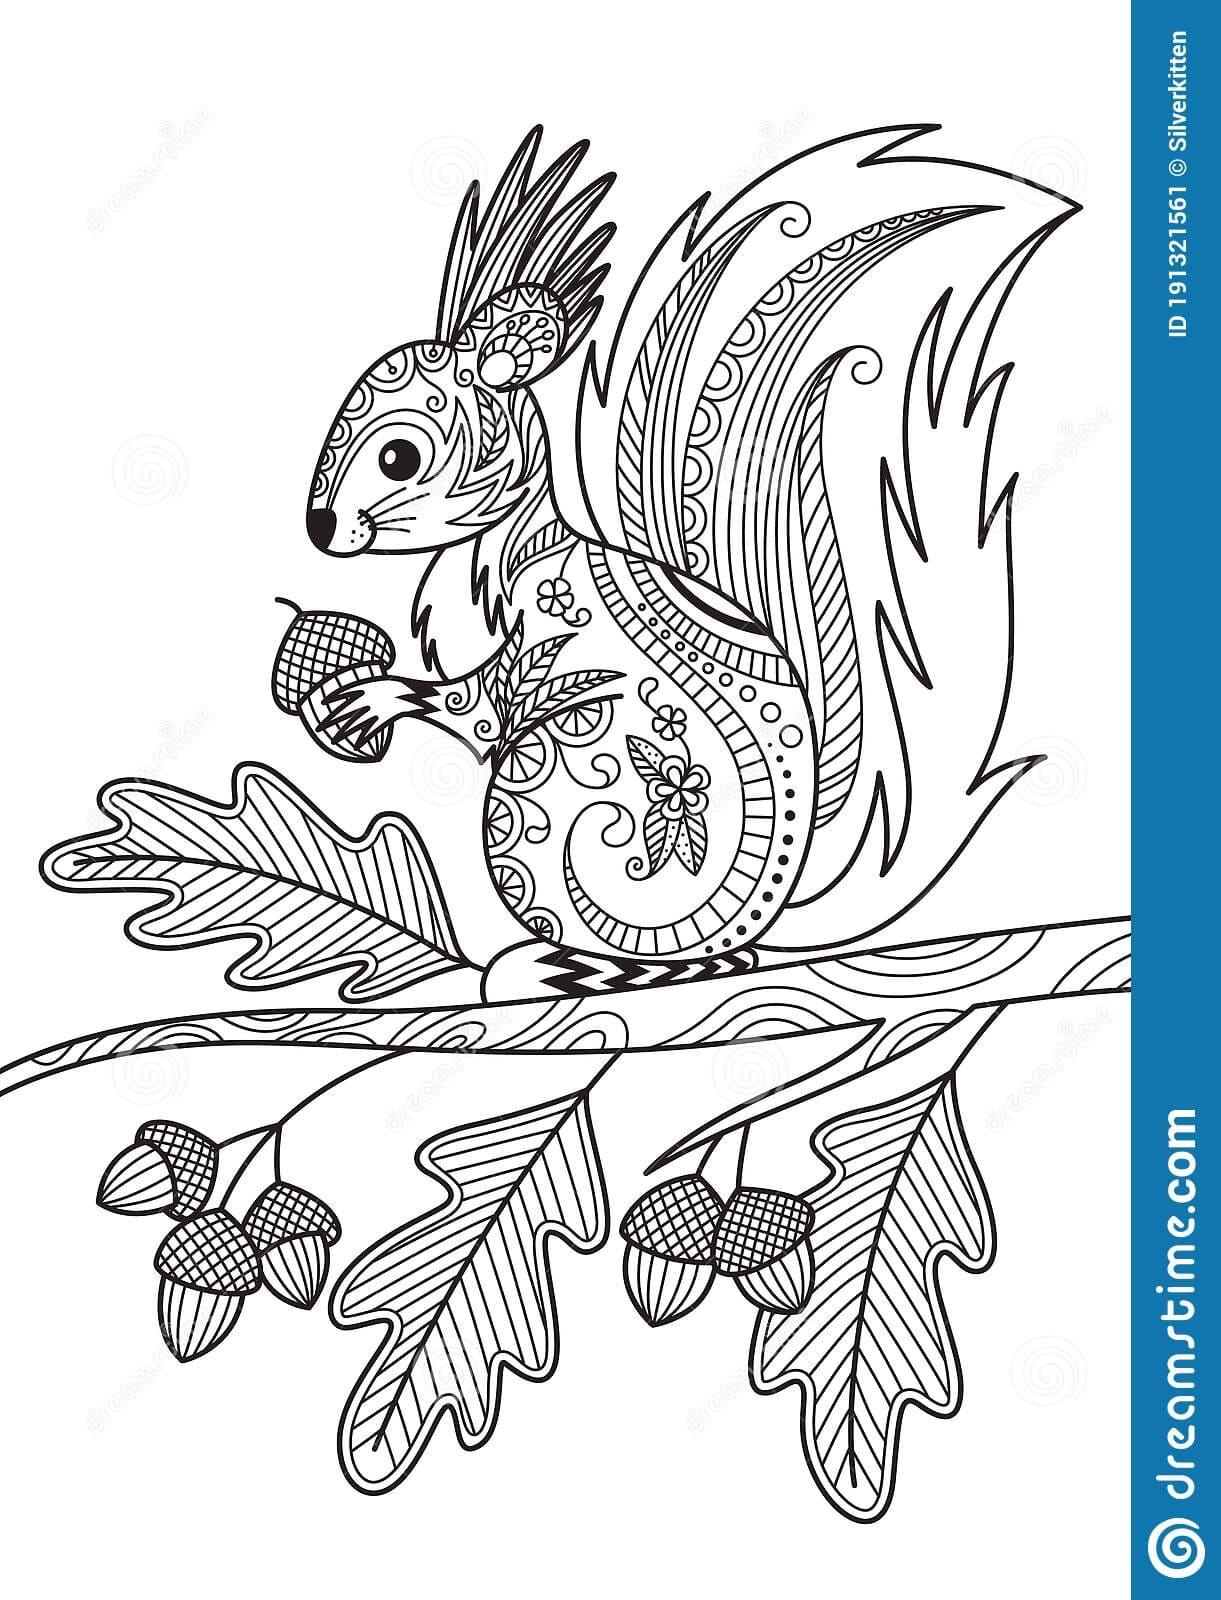 Squirrel Doodle Image